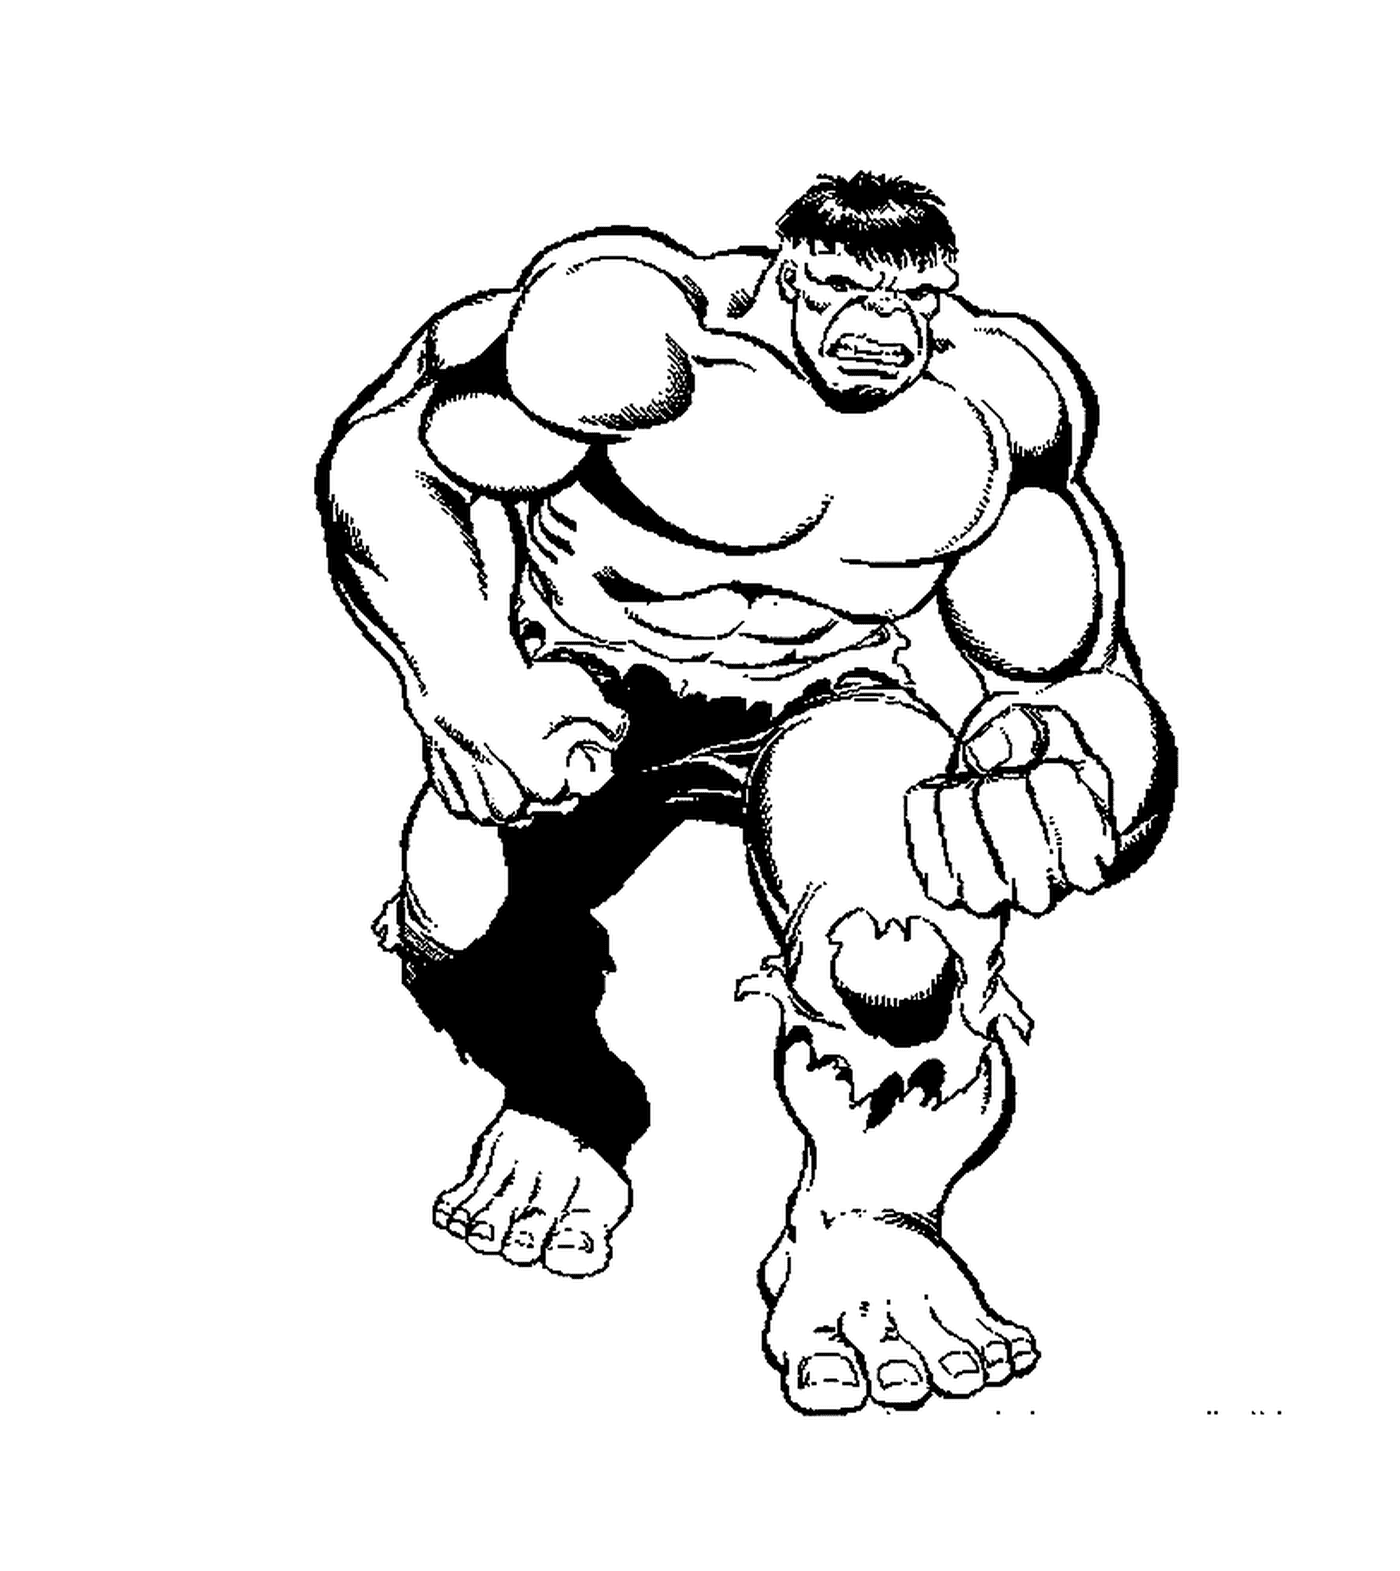  Hulk, versione semplice 